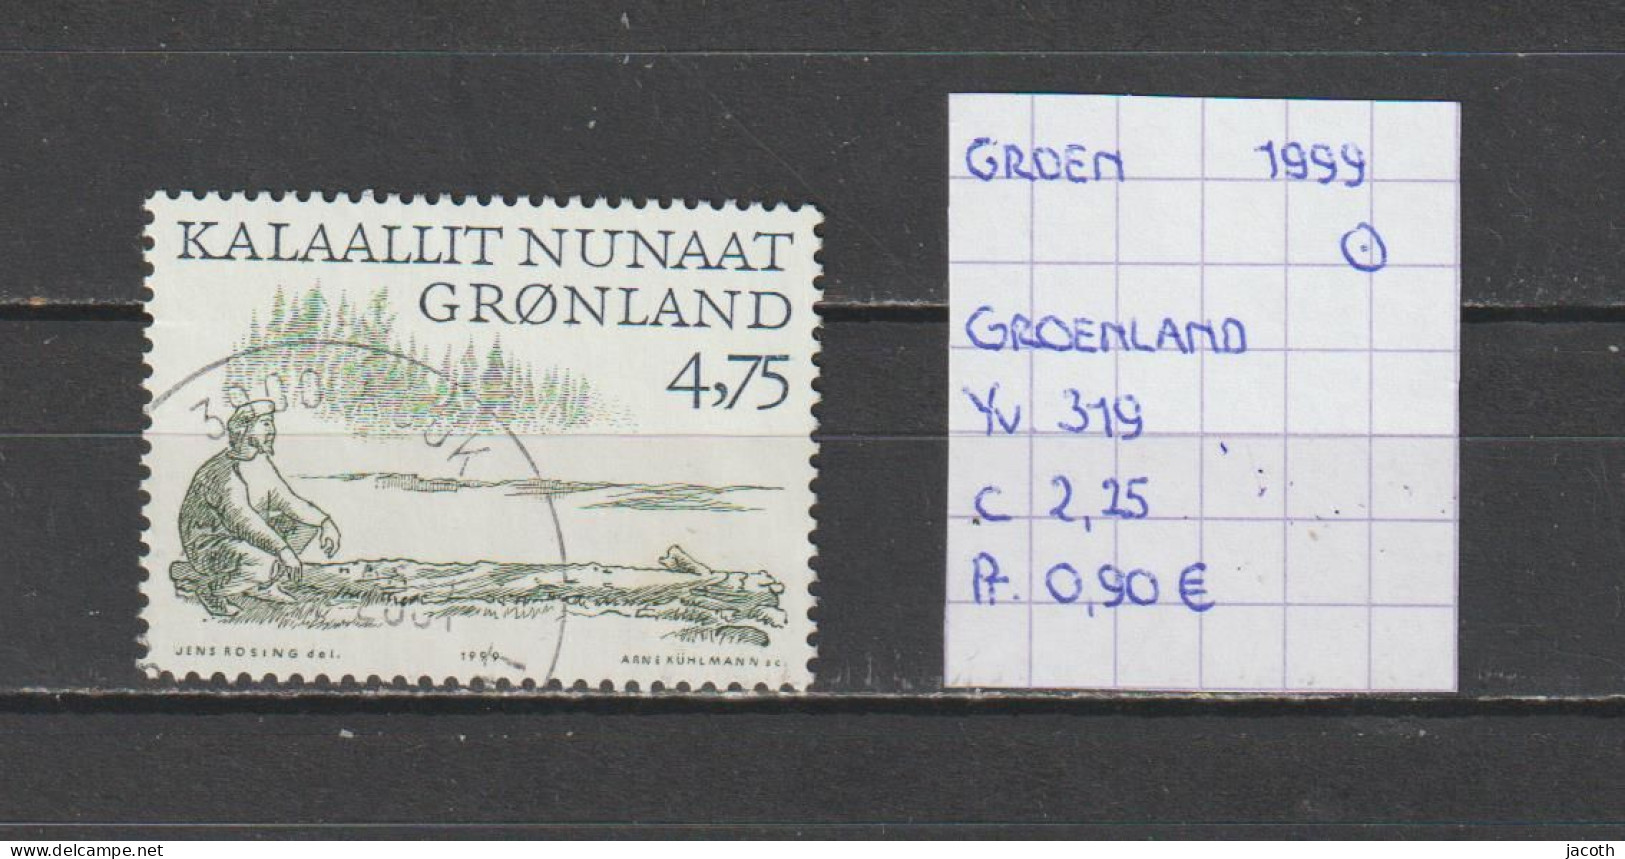 (TJ) Groenland 1999 - YT 319 (gest./obl./used) - Oblitérés